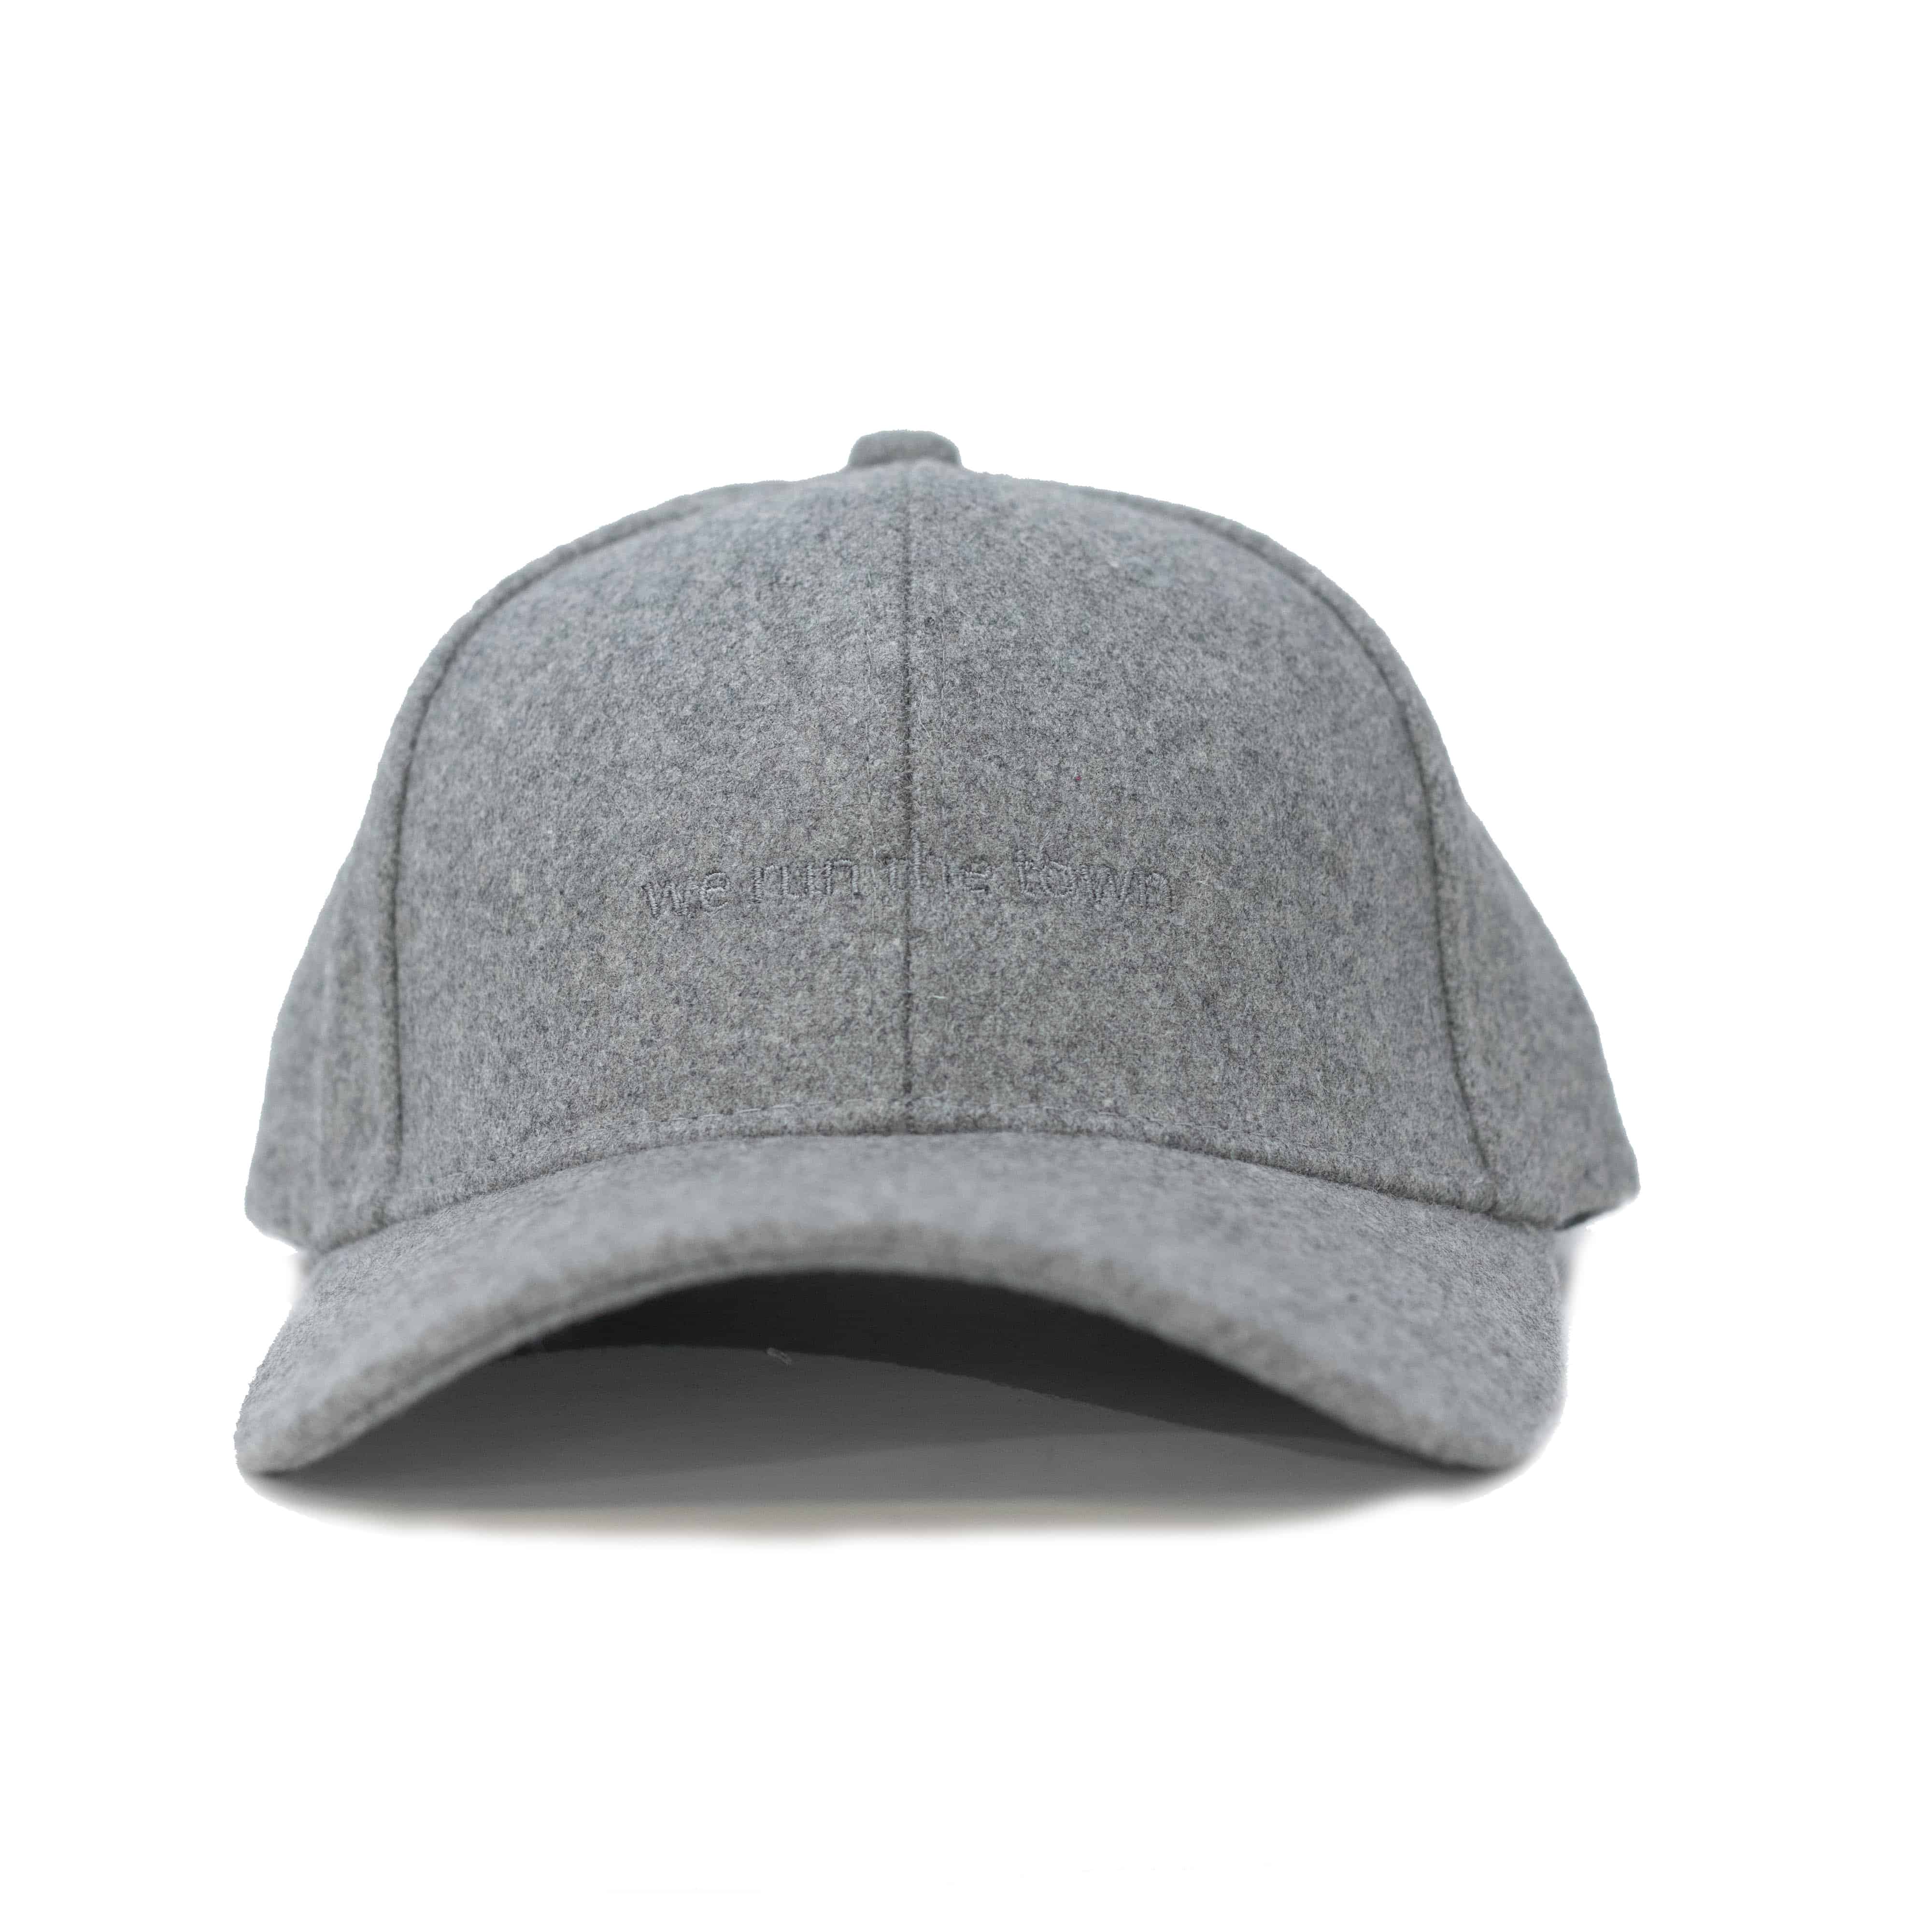 Grey wool hat - we run the town_